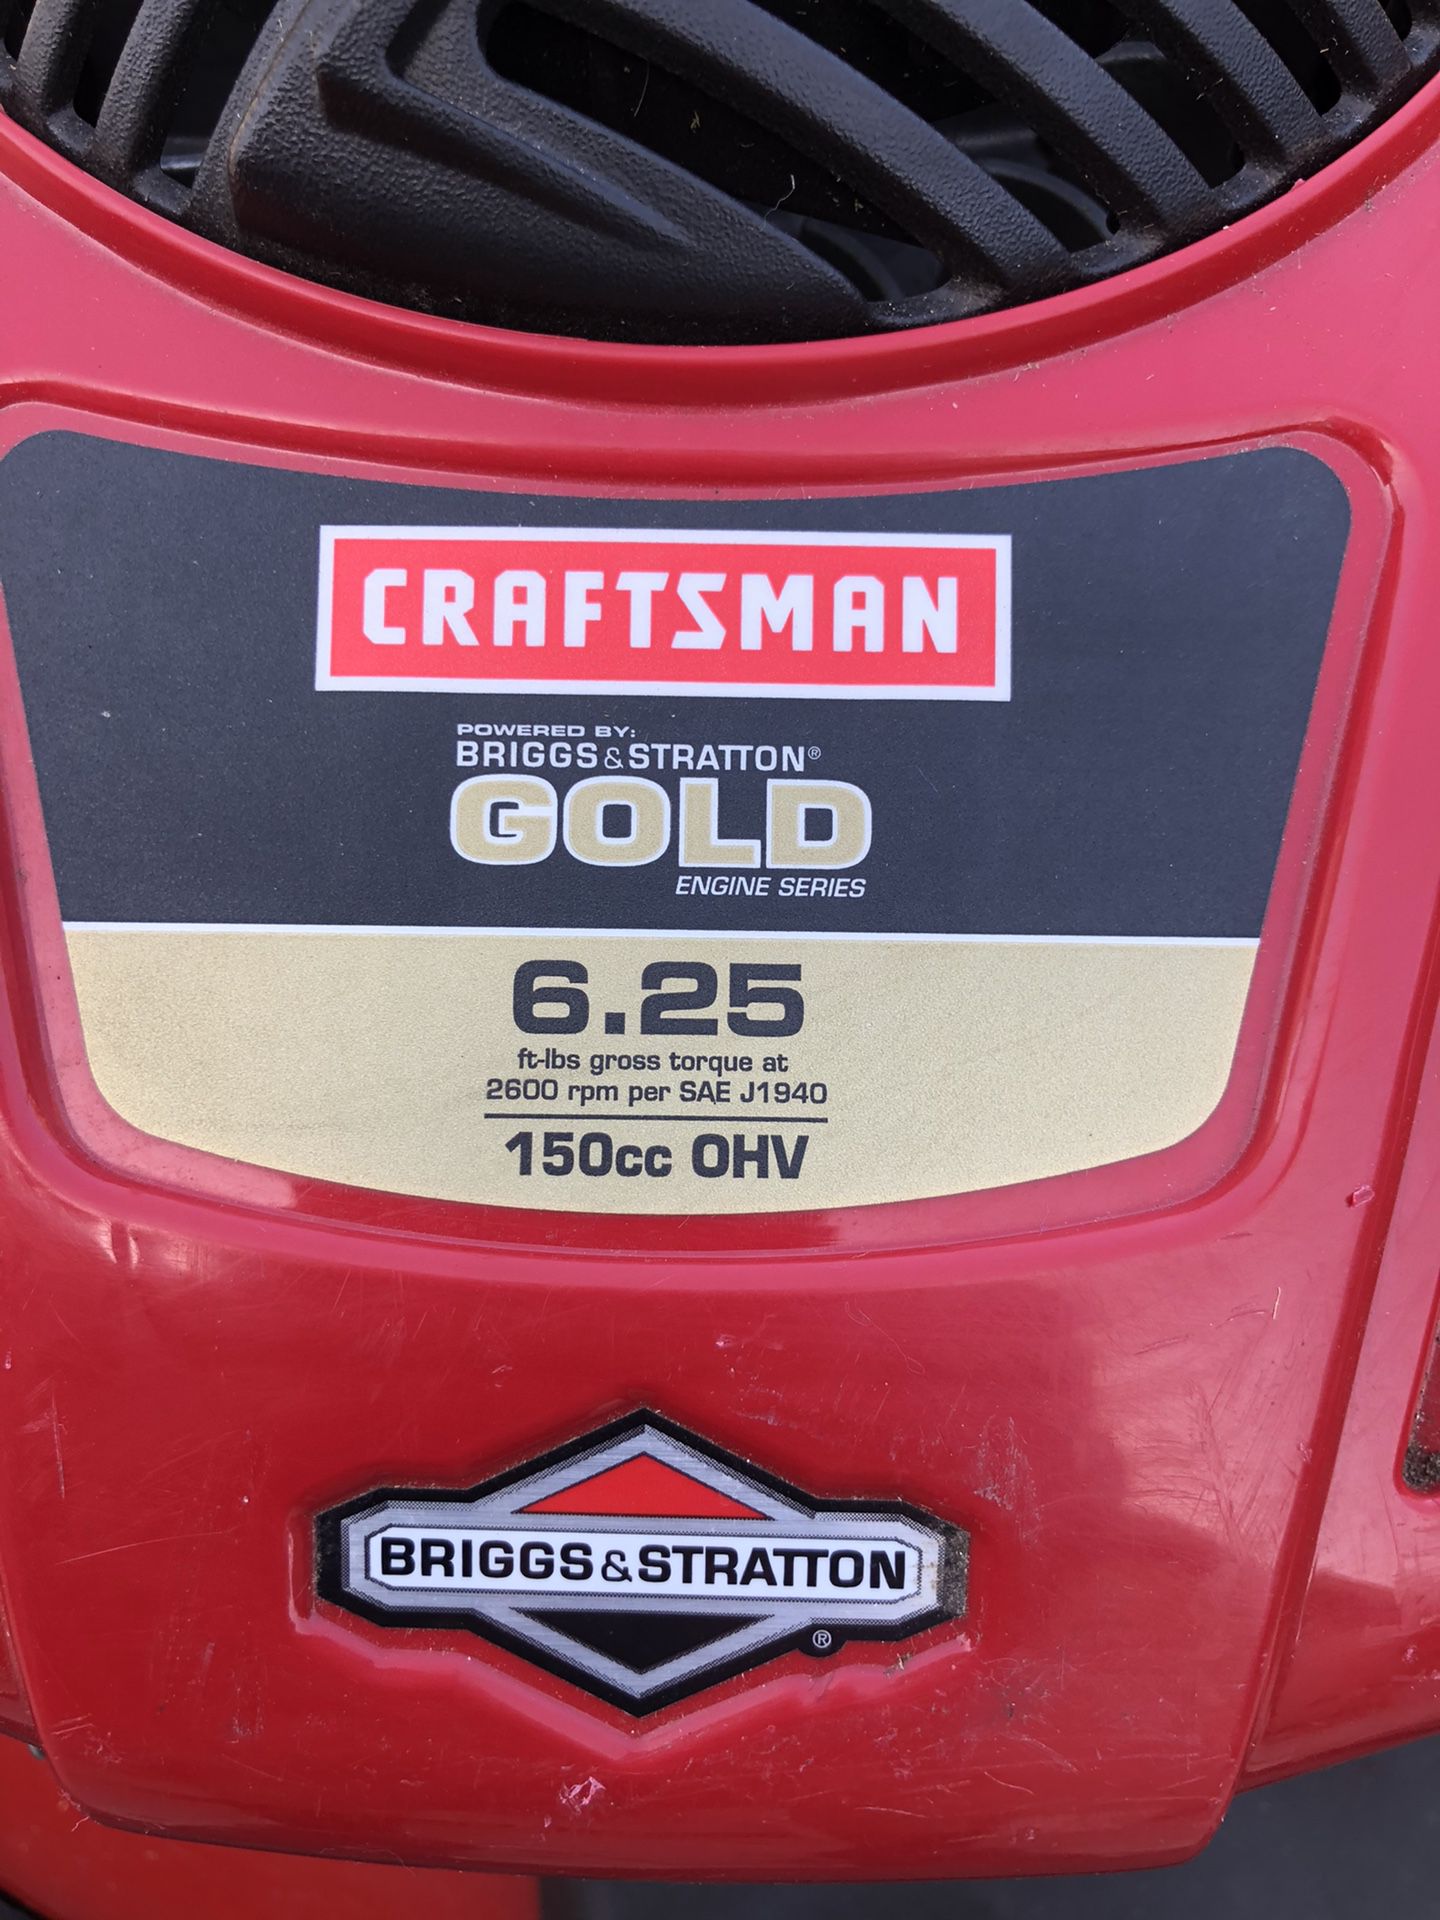 Craftsman gold lawn mower